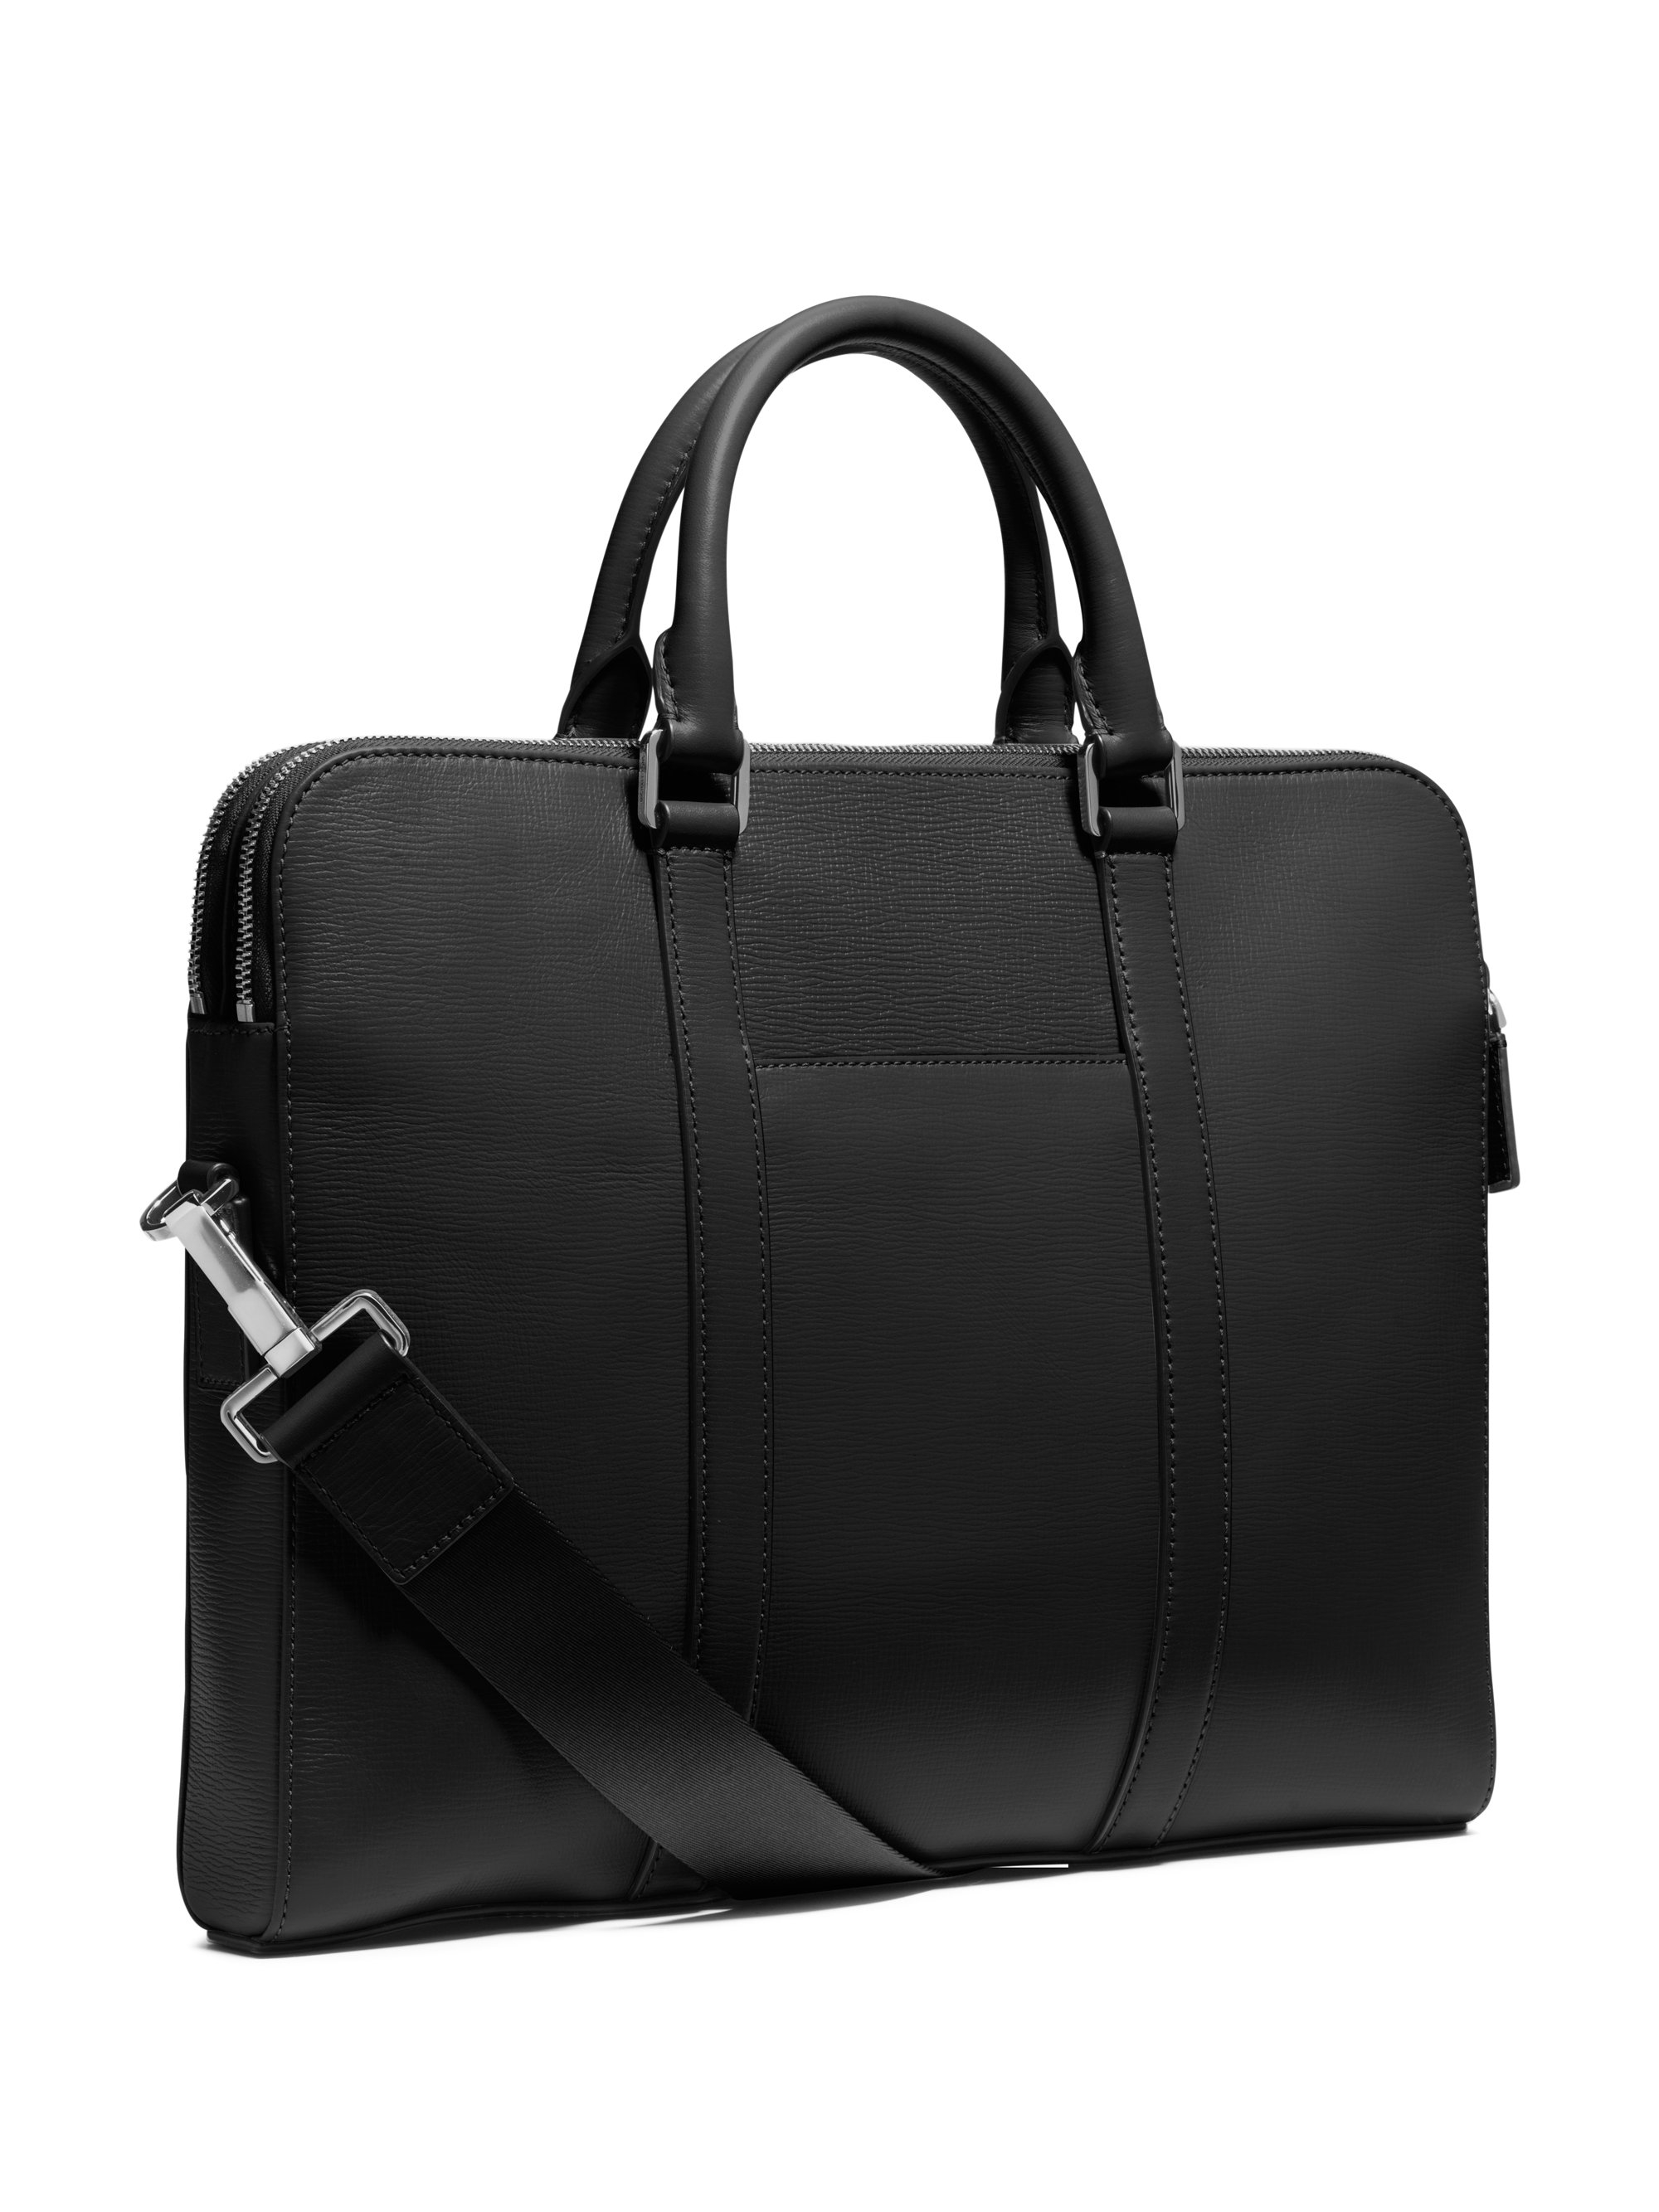 Lyst - Michael Kors Maya Leather Double-zip Briefcase in Black for Men